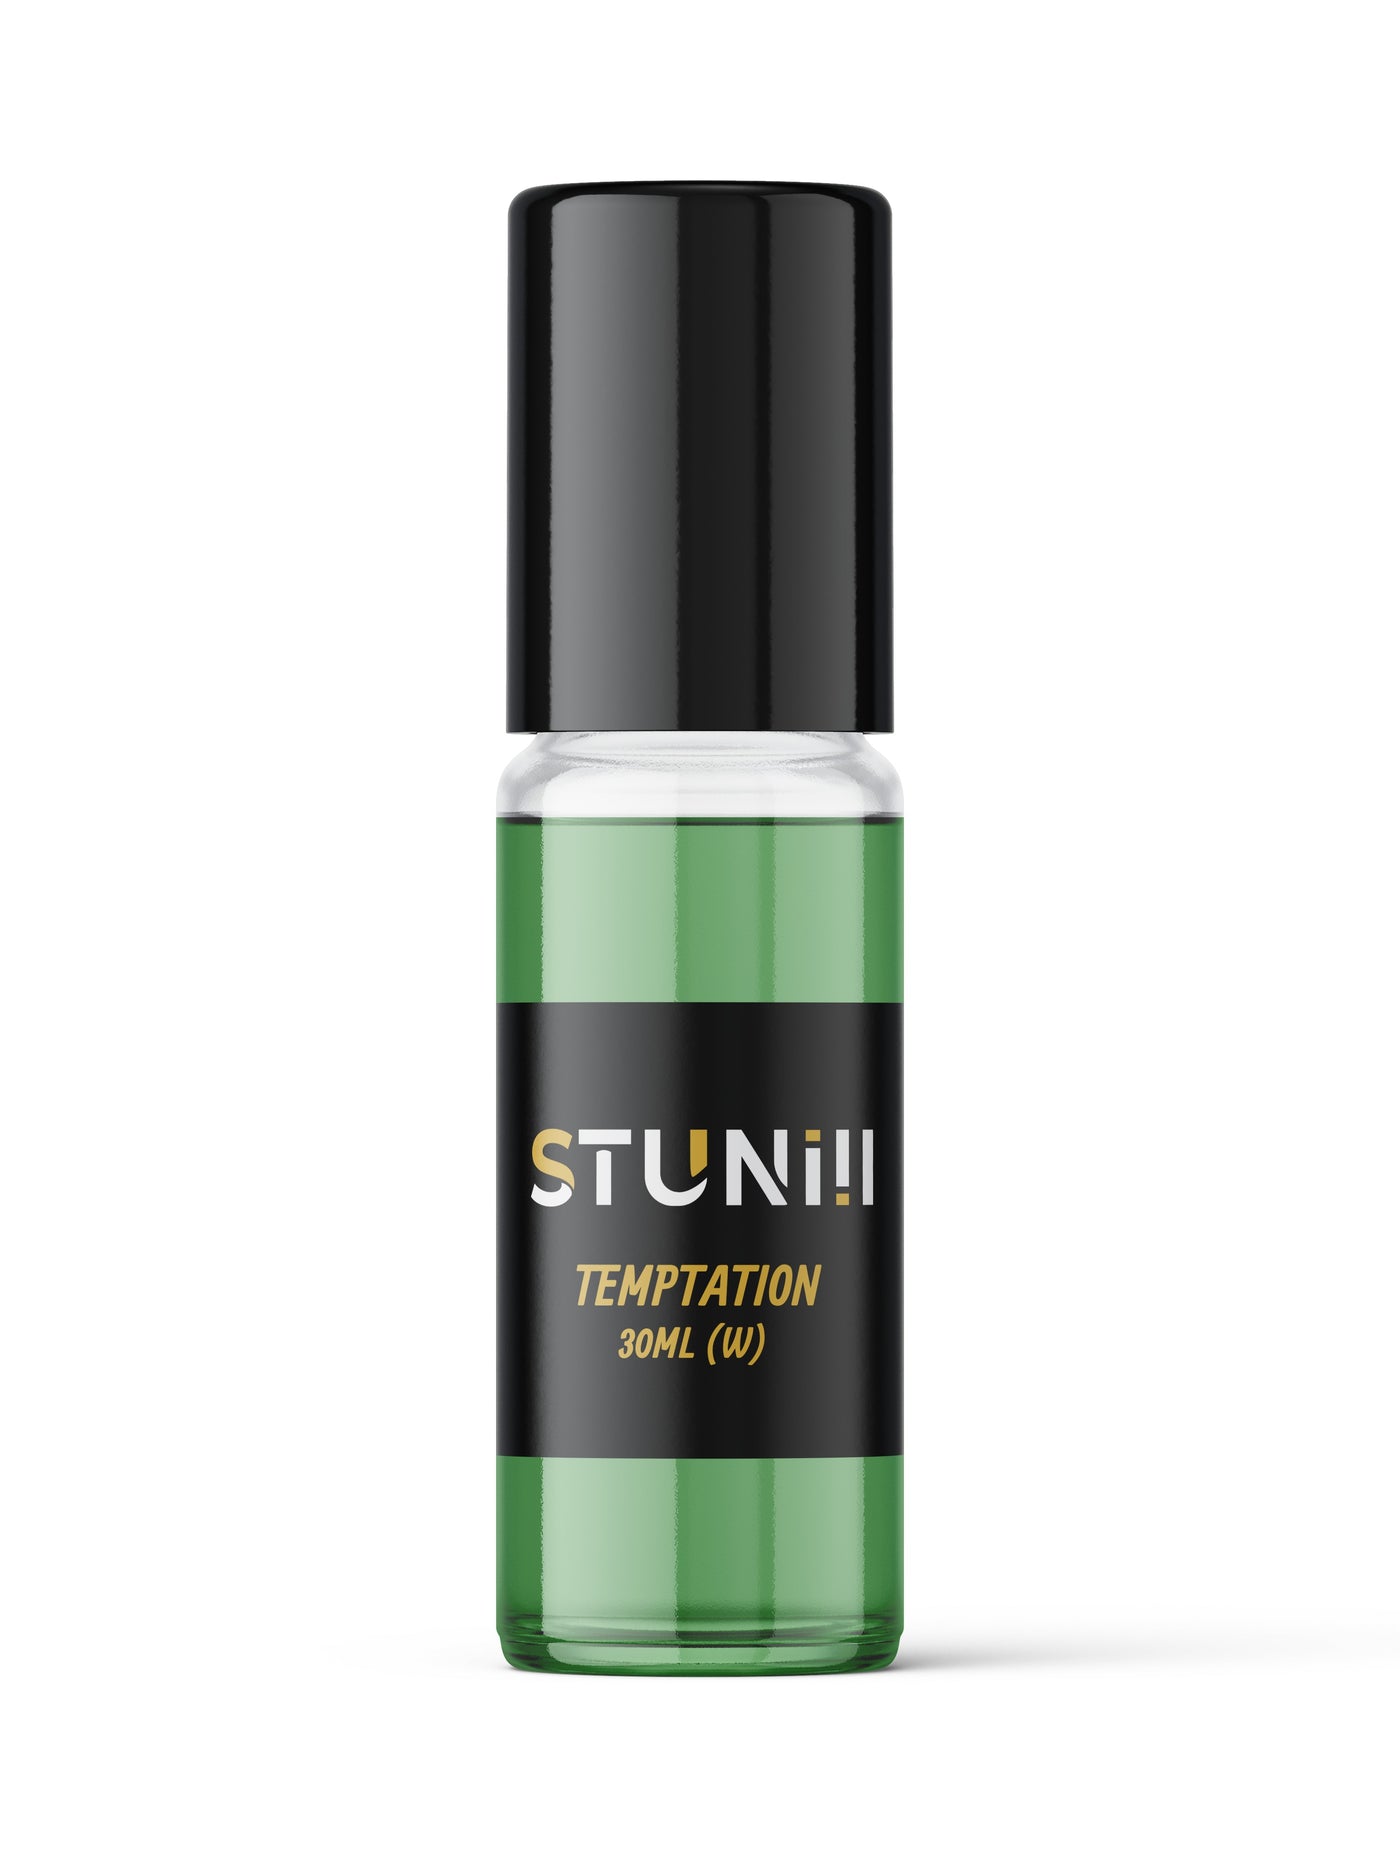 Temptation | Perfume STUNIII